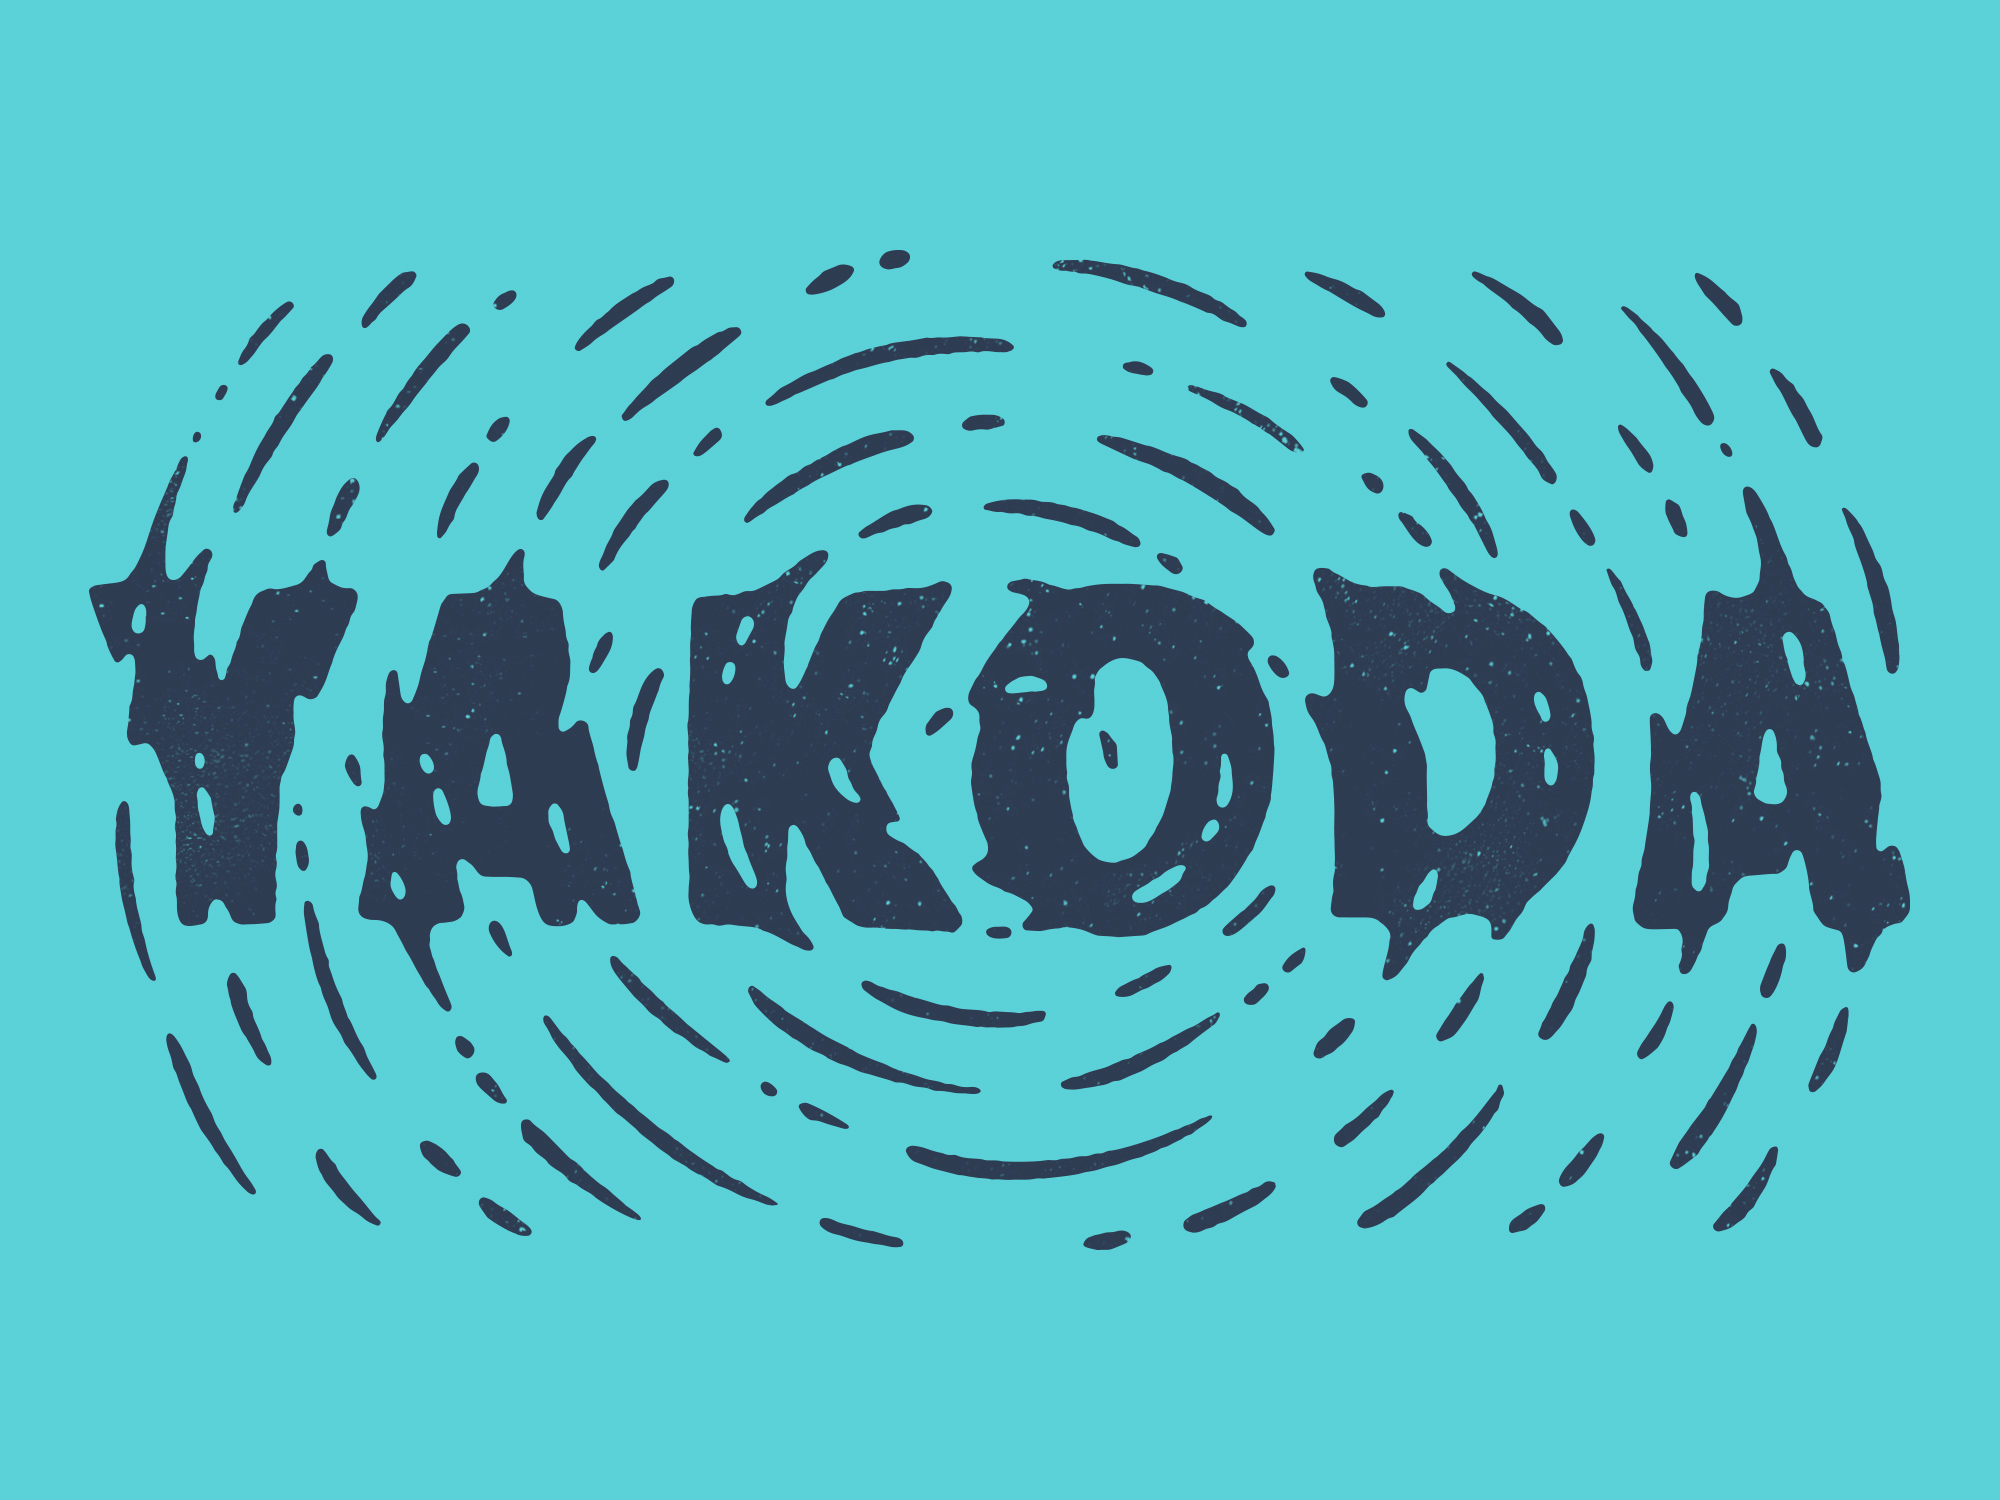 the word "yakoda" with watery ripples